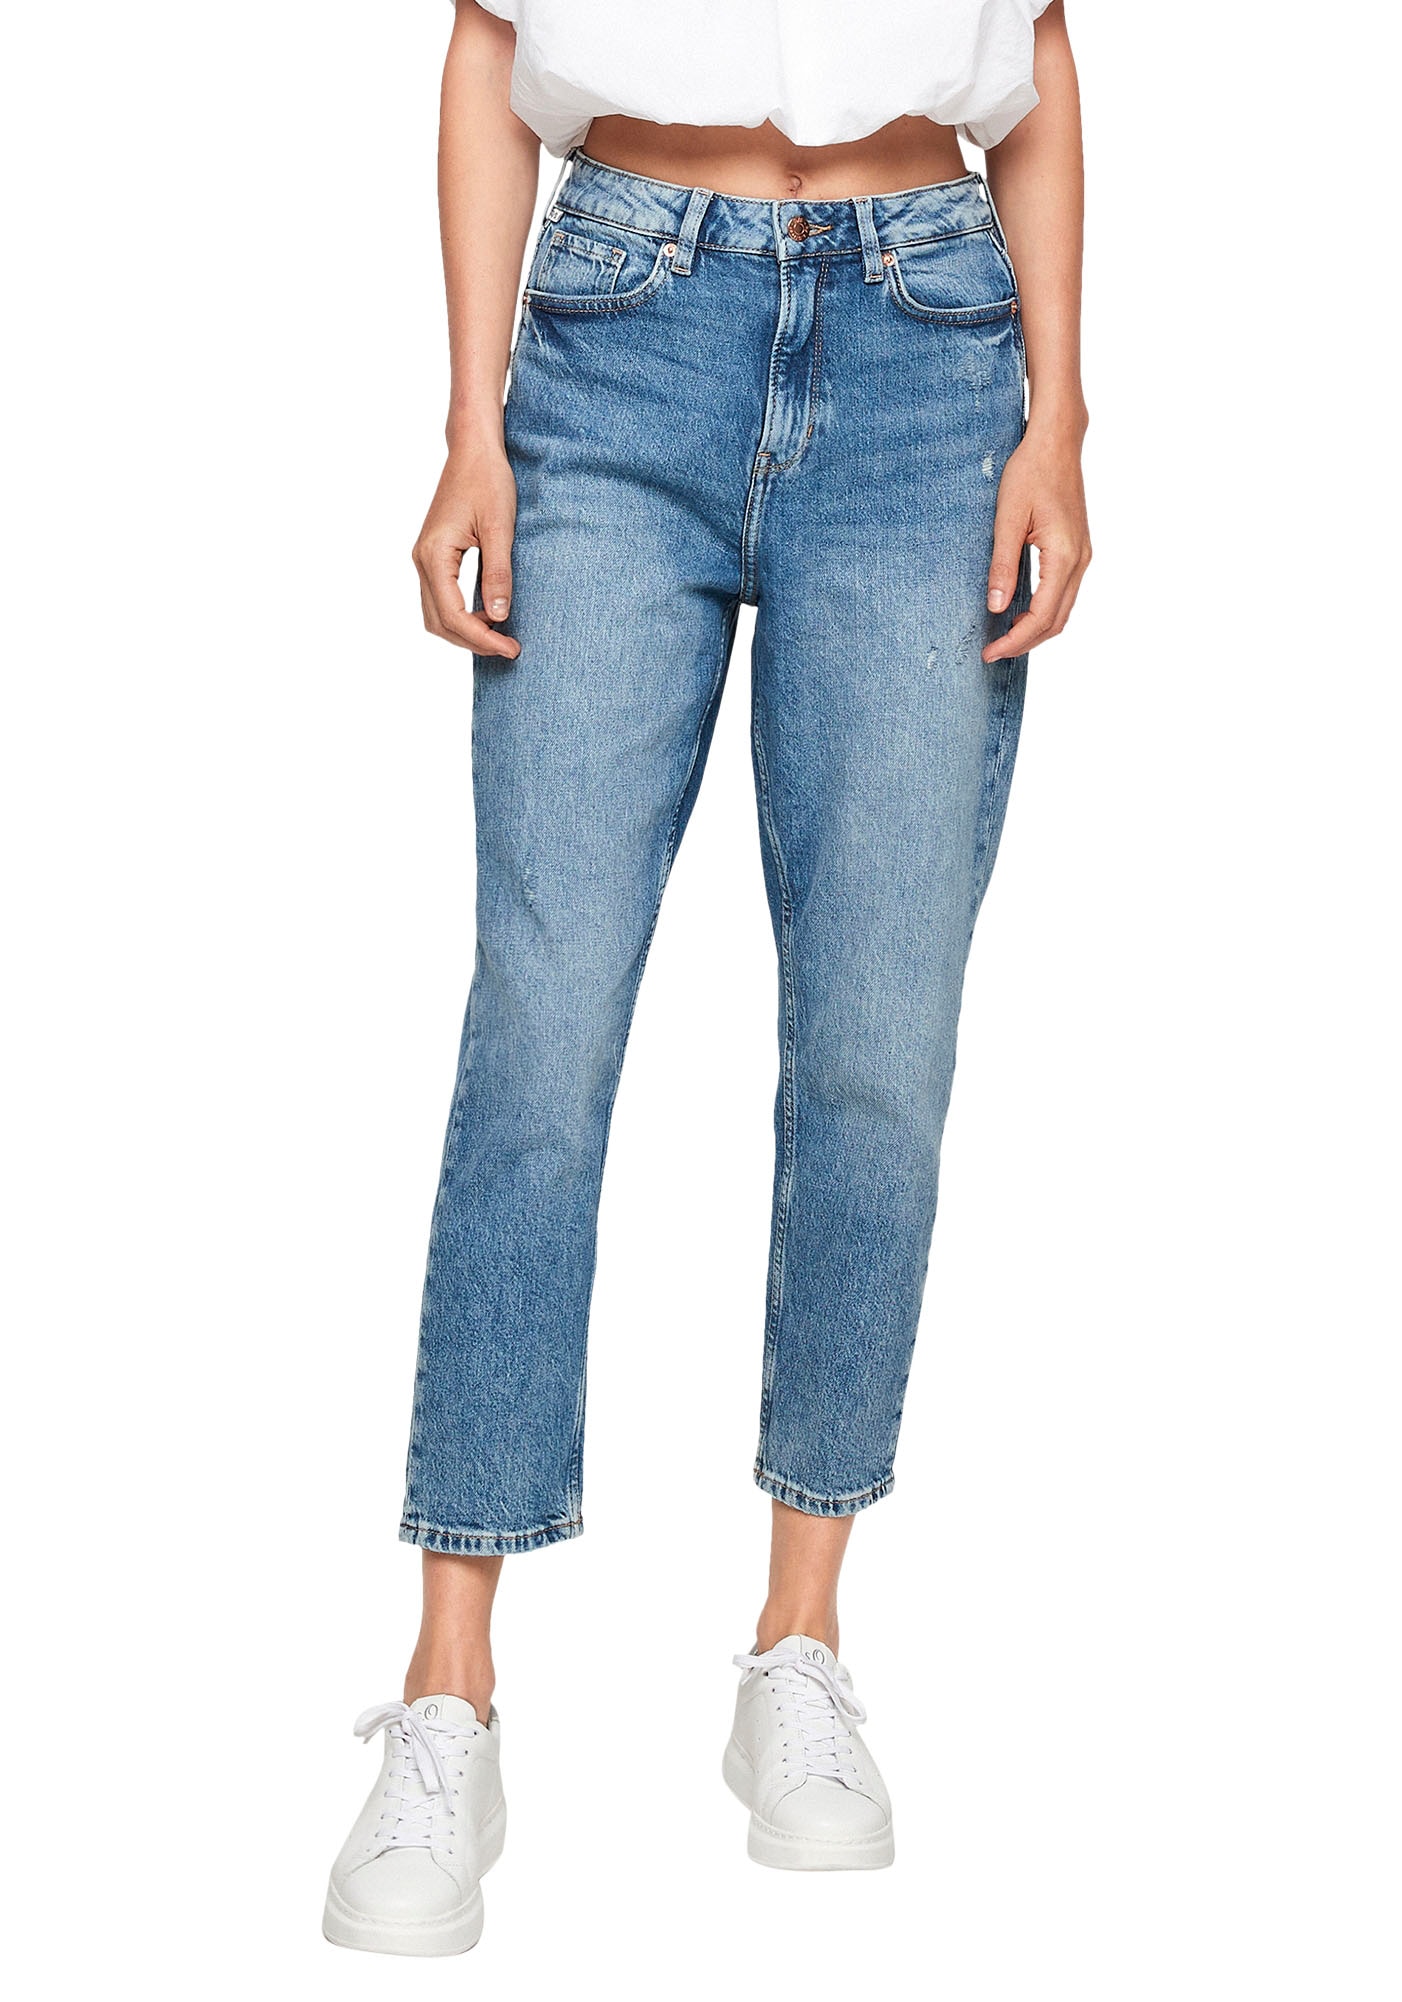 by OTTO 5-Pocket-Style Online im Q/S Shop s.Oliver Tapered-fit-Jeans, klassischen im